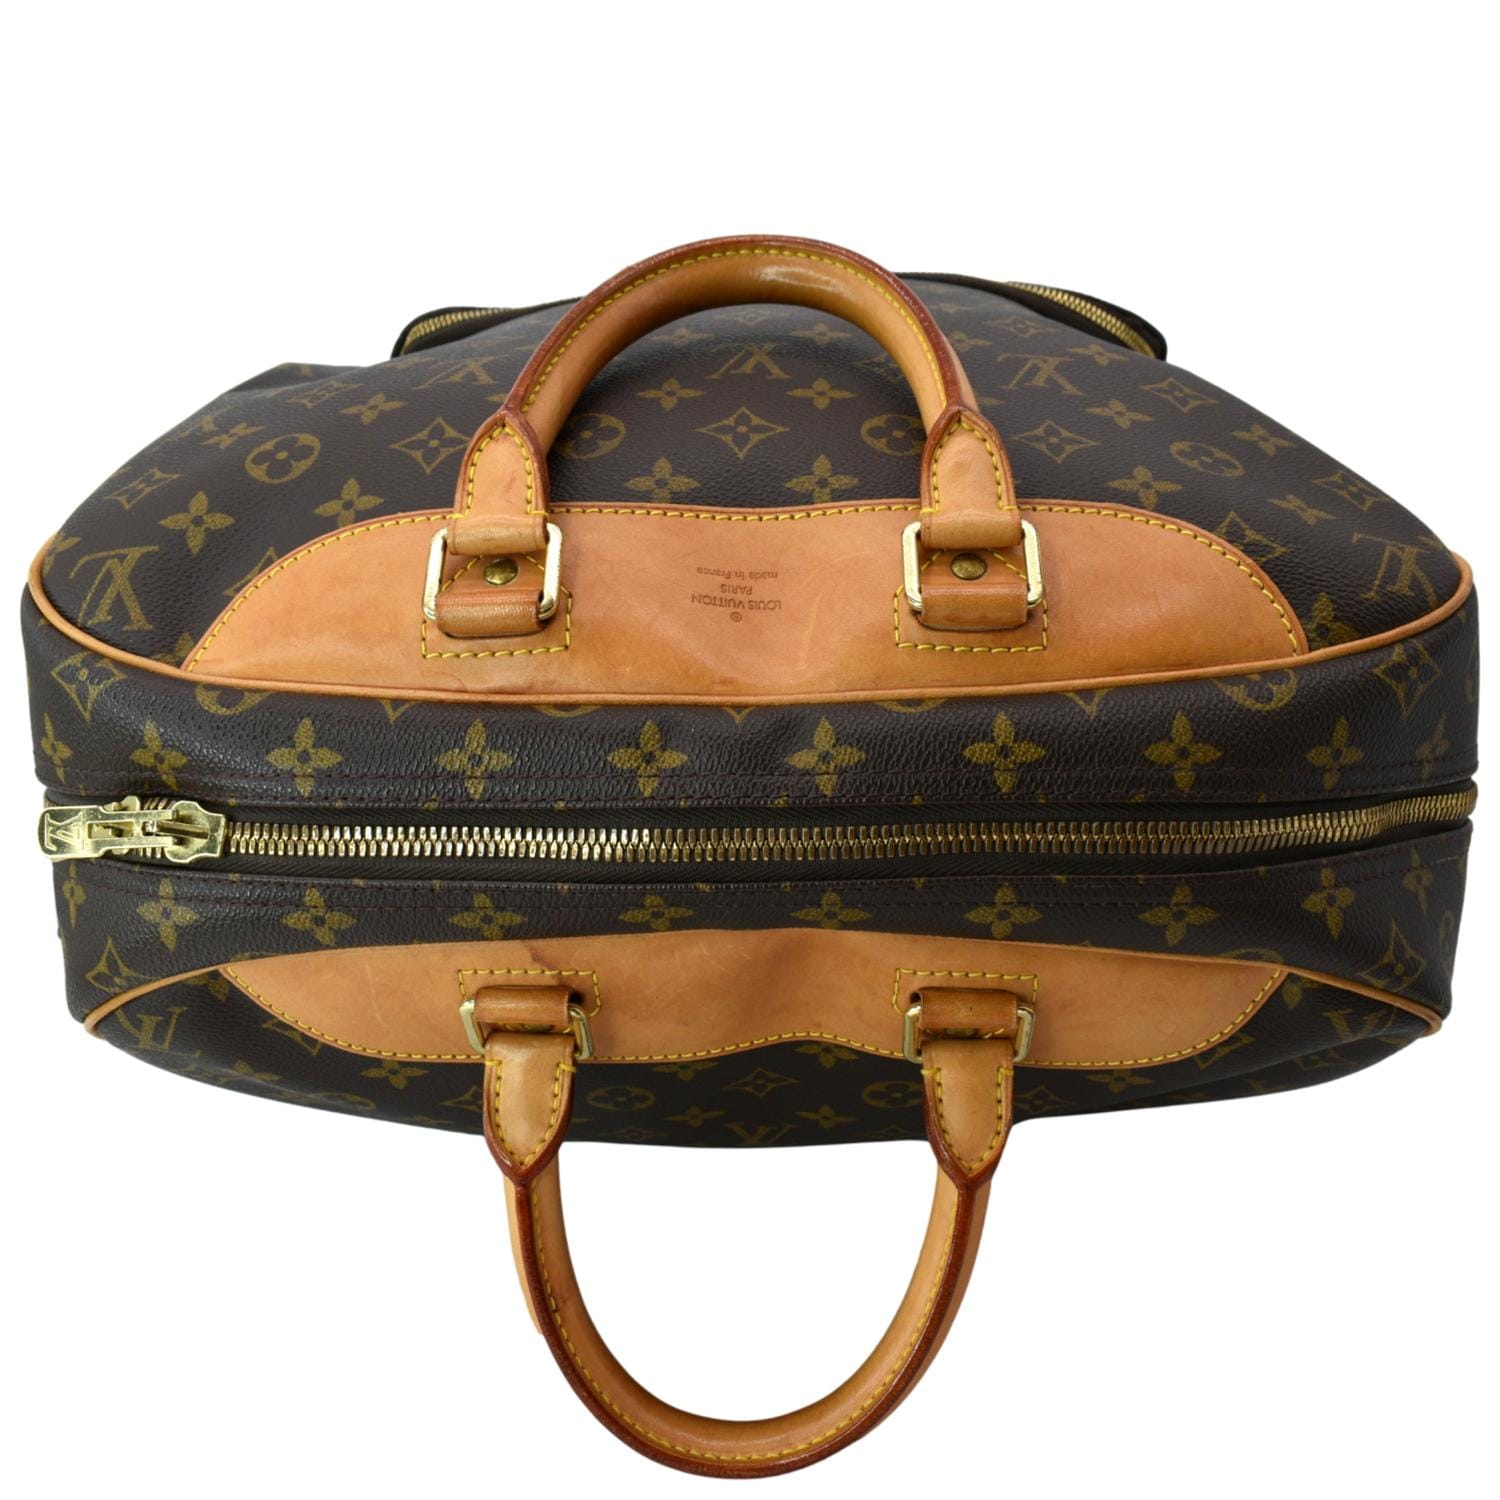 Buy [Bag] LOUIS VUITTON Louis Vuitton Monogram Evasion Evasion Boston Bag  Handbag Travel Bag Sports Bag M41443 from Japan - Buy authentic Plus  exclusive items from Japan